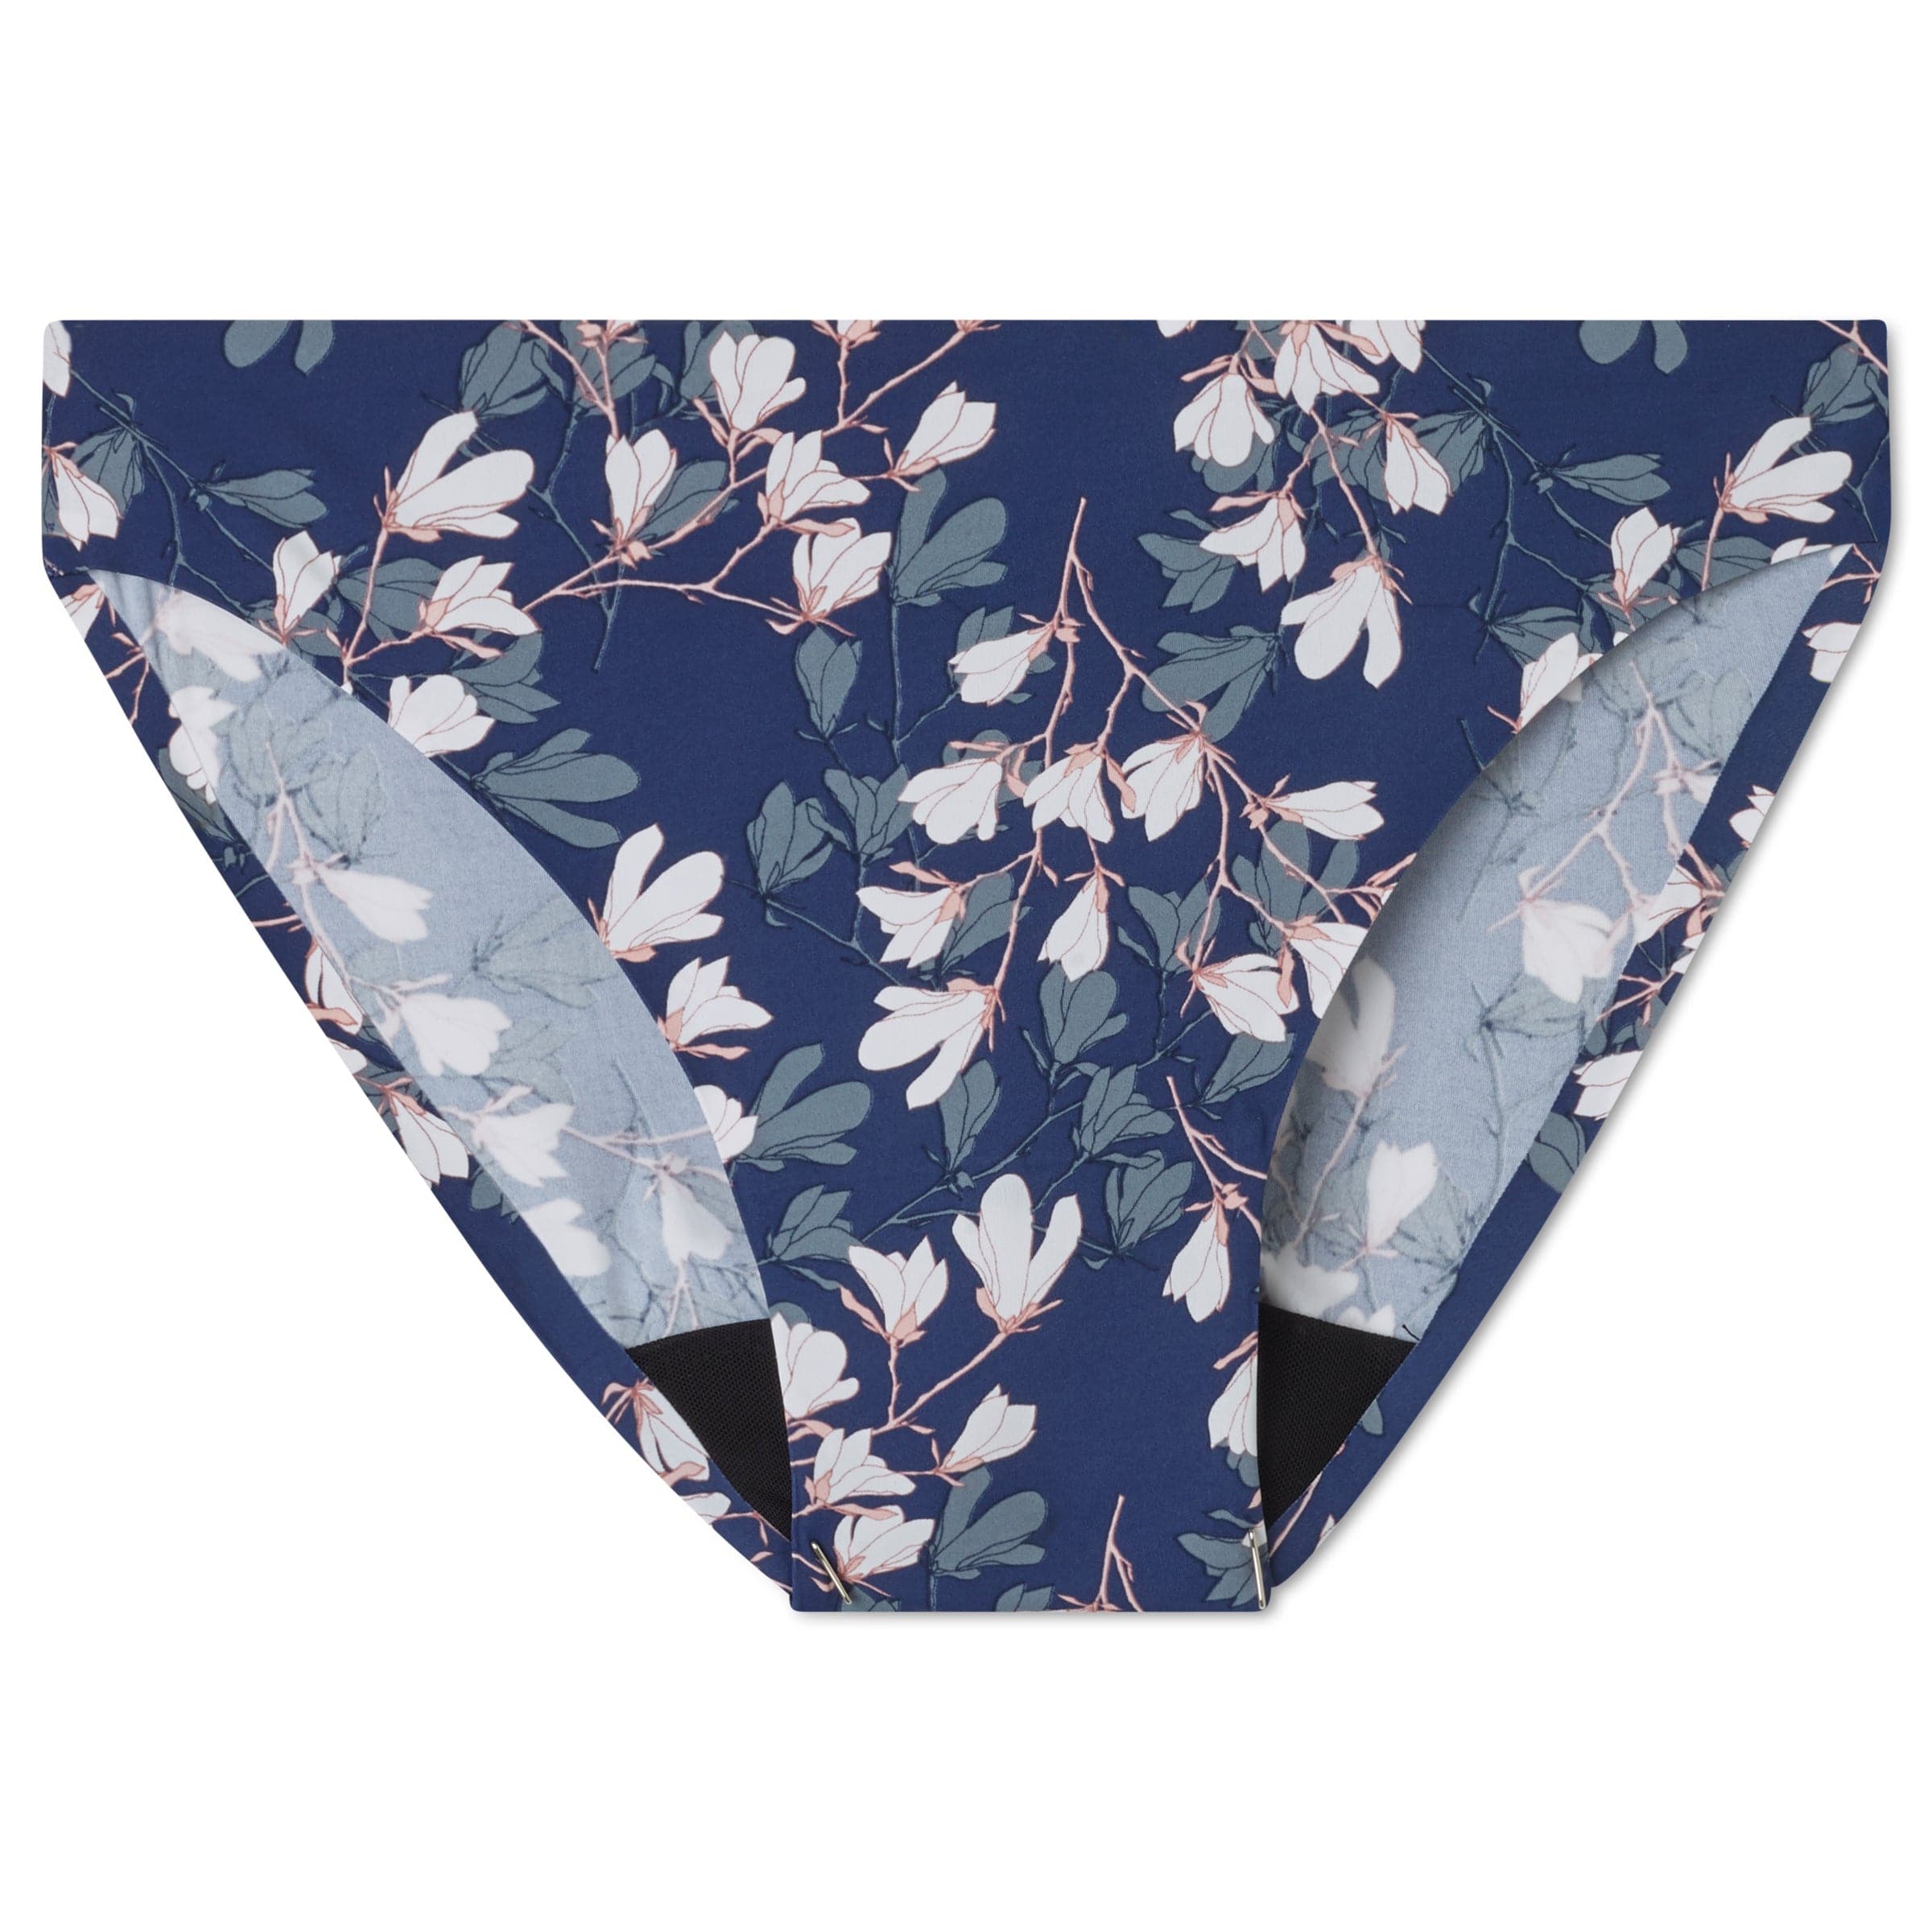 Period Underwear - Bikini | Floral